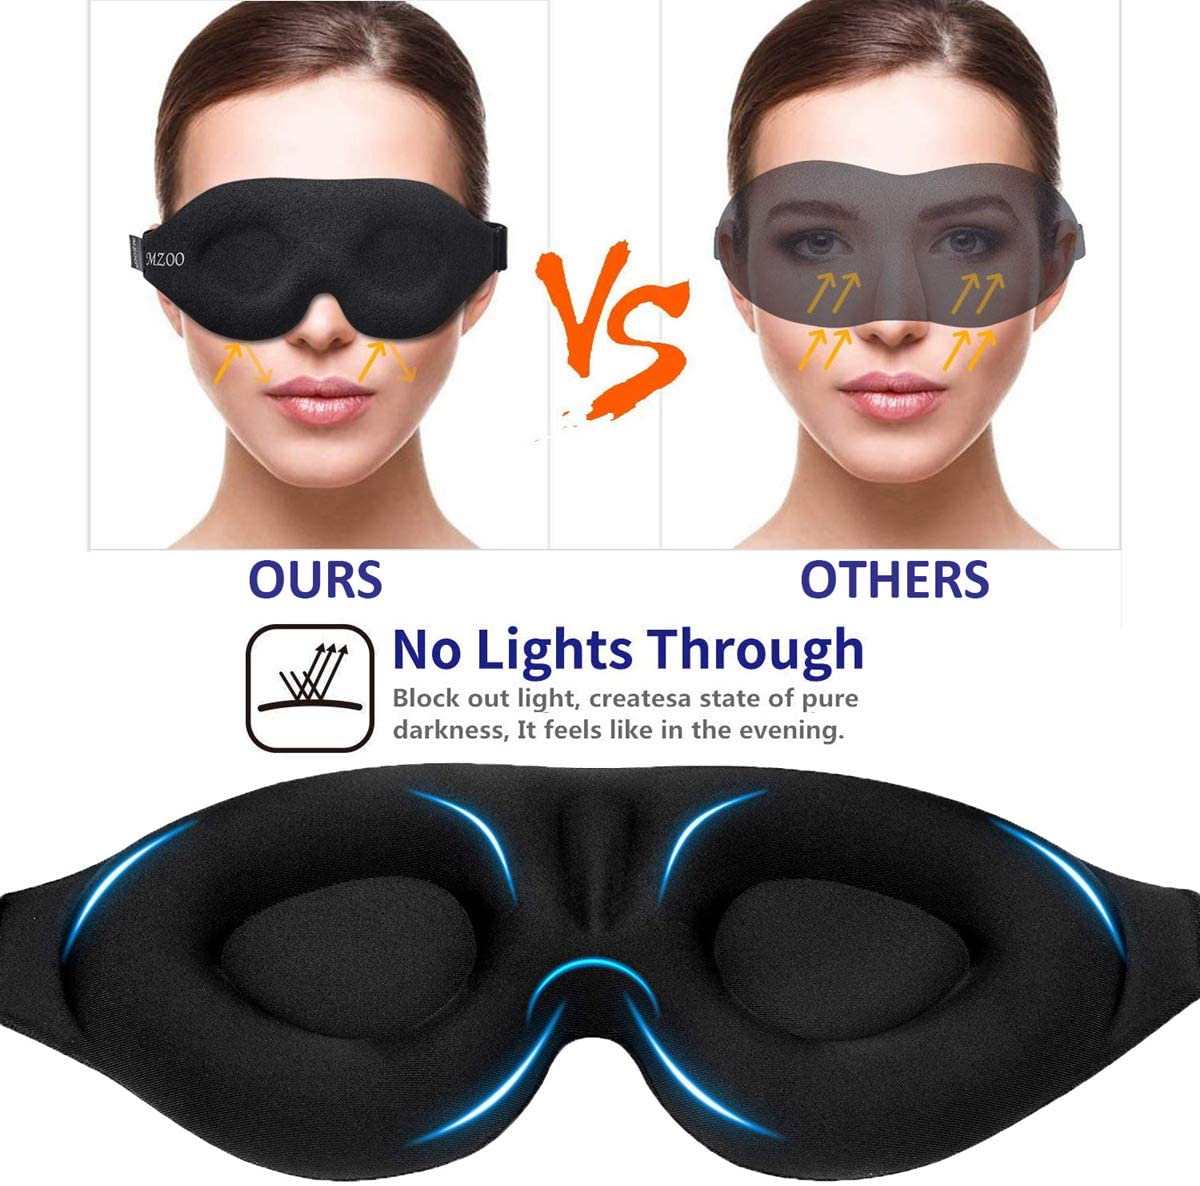 3D Sleep Mask Eye Cover